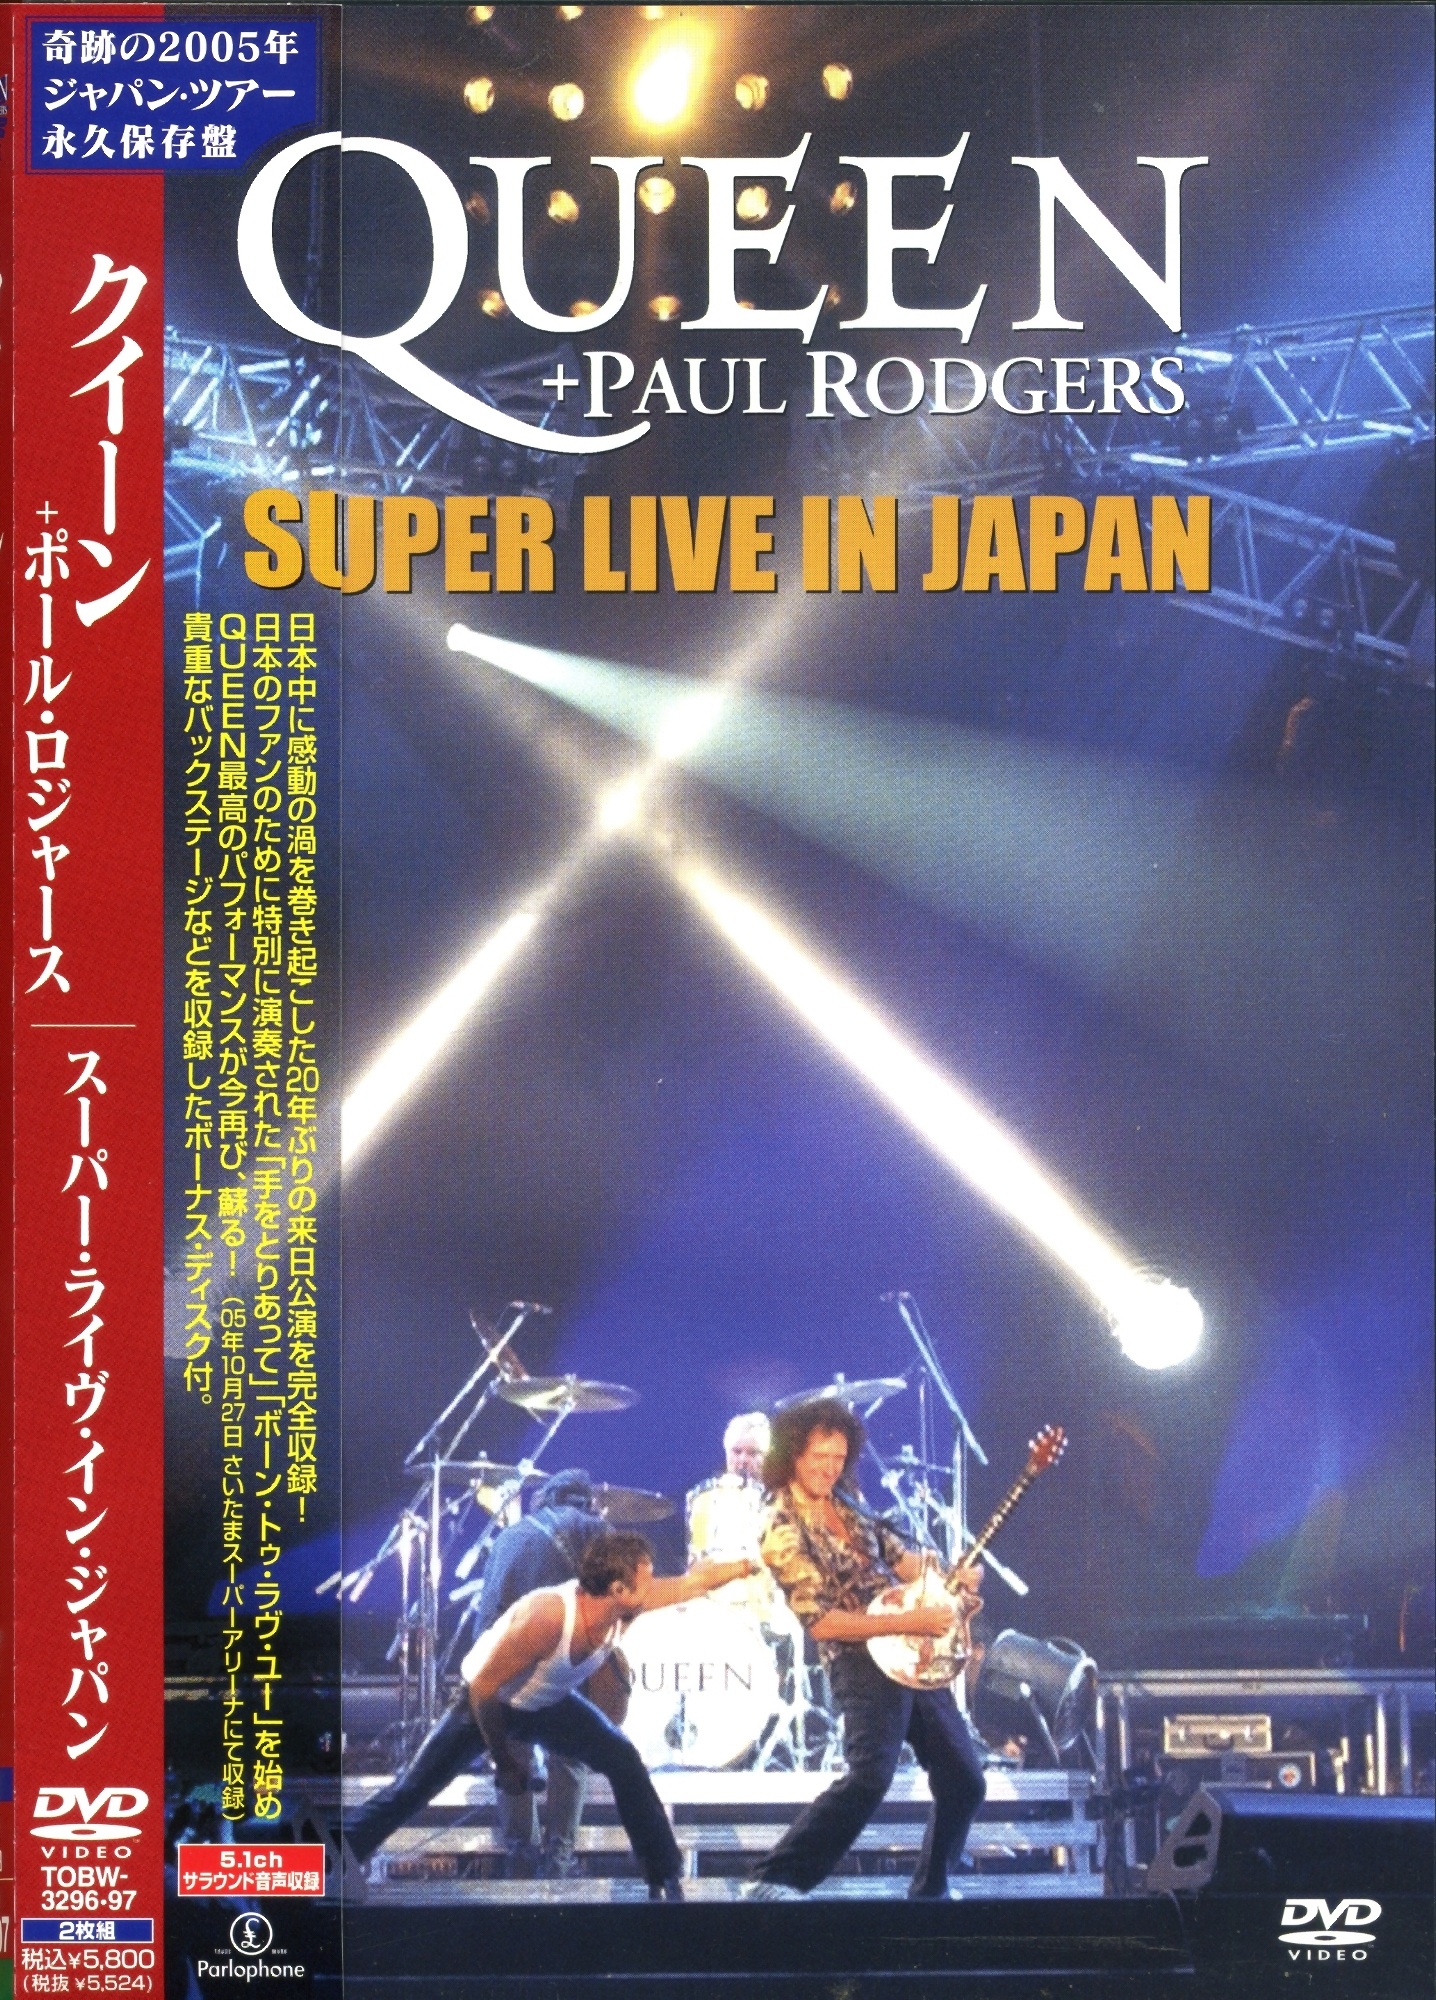 DVD, Blu-ray, Video CD & UMD – Queenvinyls.com